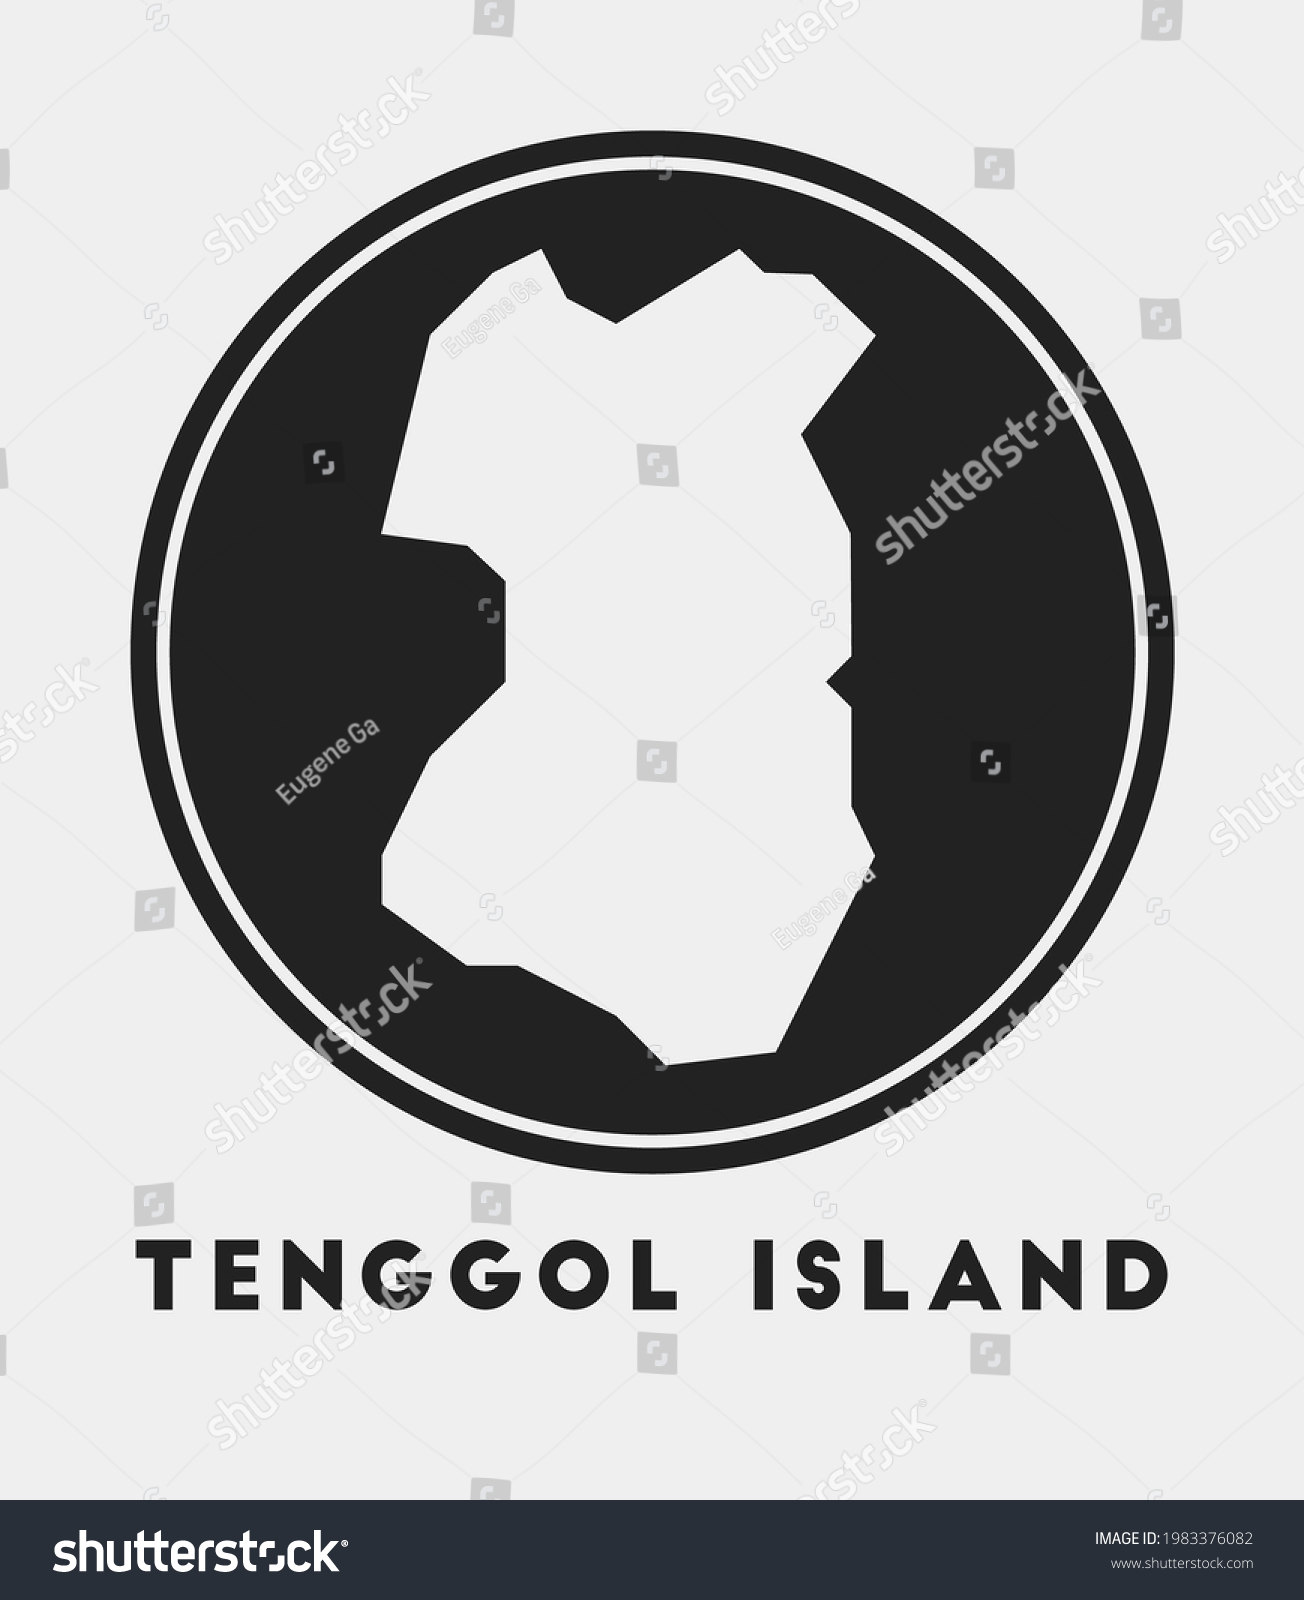 Tenggol Island icon. Round logo with border map - Royalty Free Stock ...